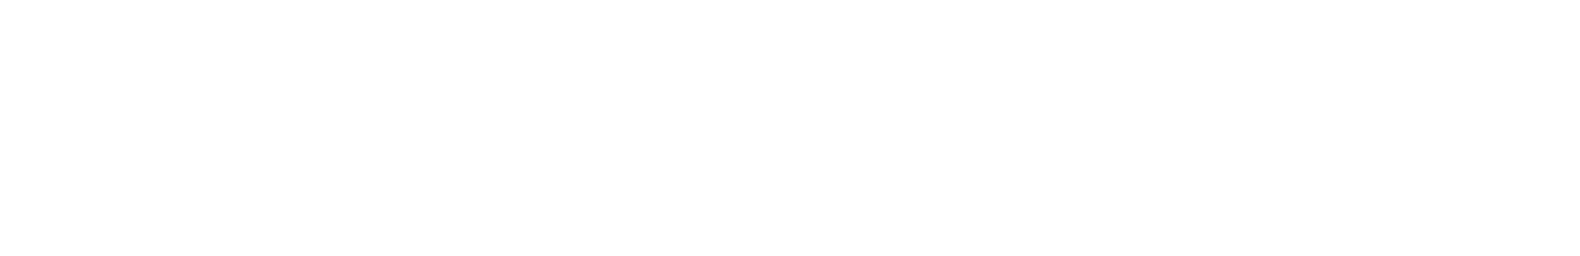 Oakley Capital Investments logo grand pour les fonds sombres (PNG transparent)